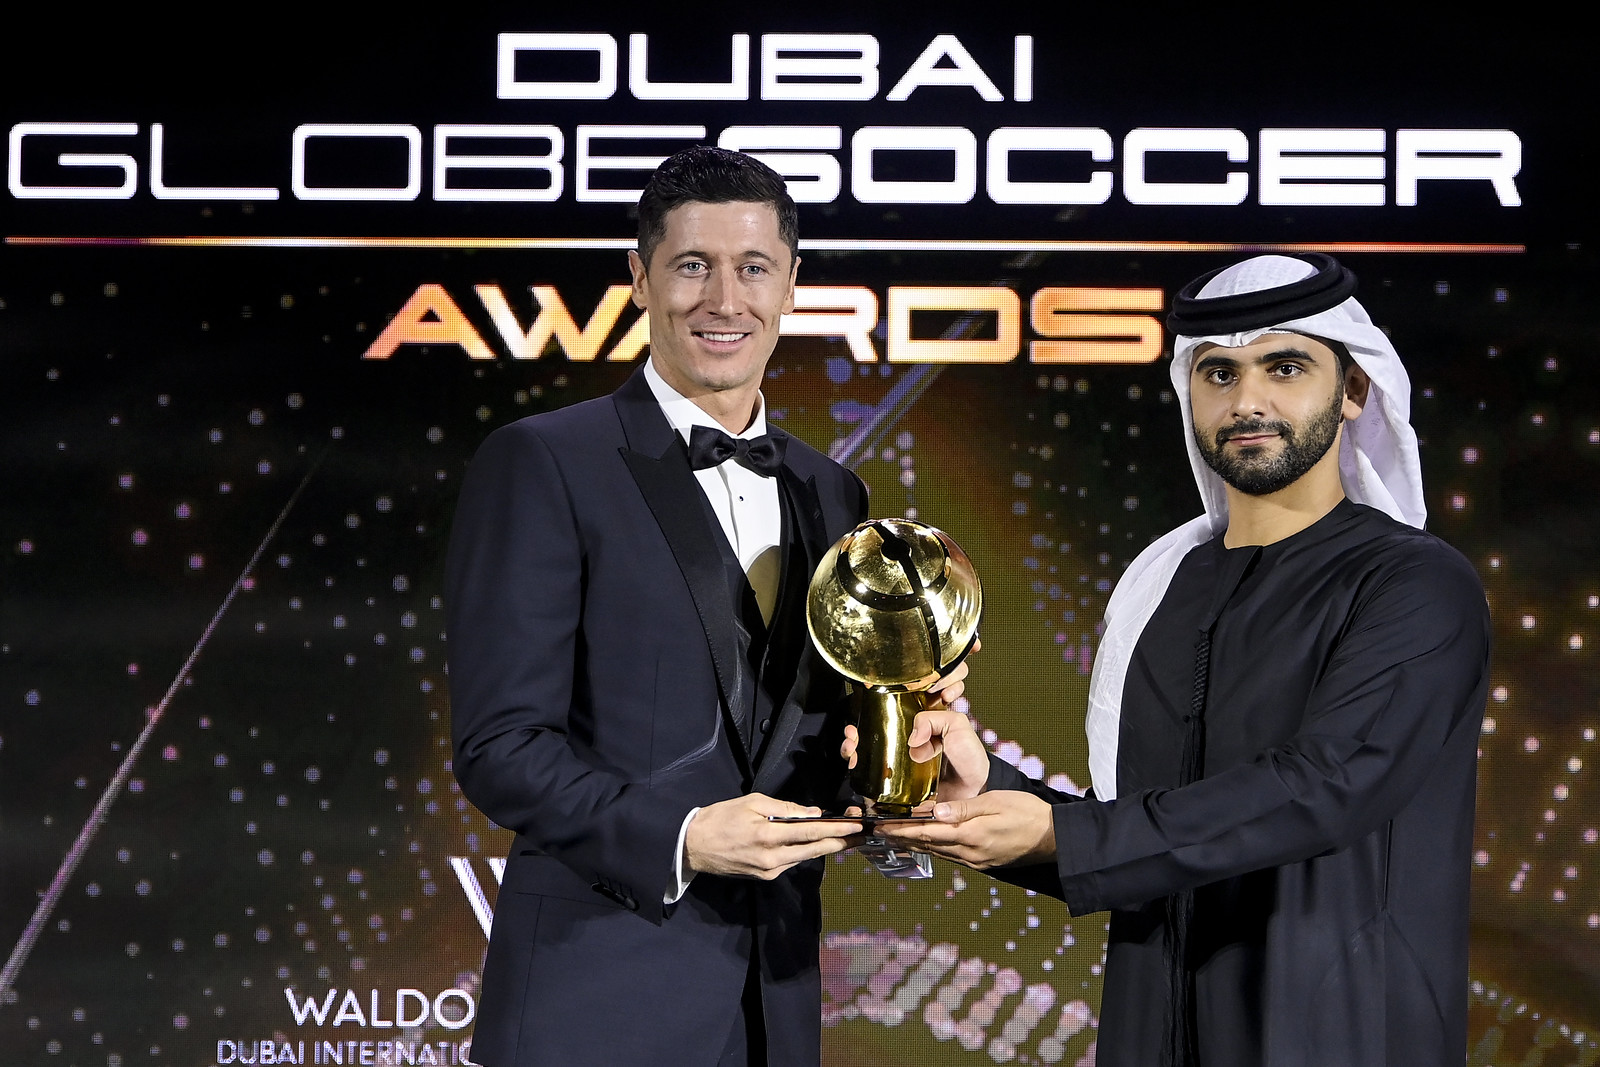 Dubai Globe Soccer Award 2021 - Tredicesima Edizione.